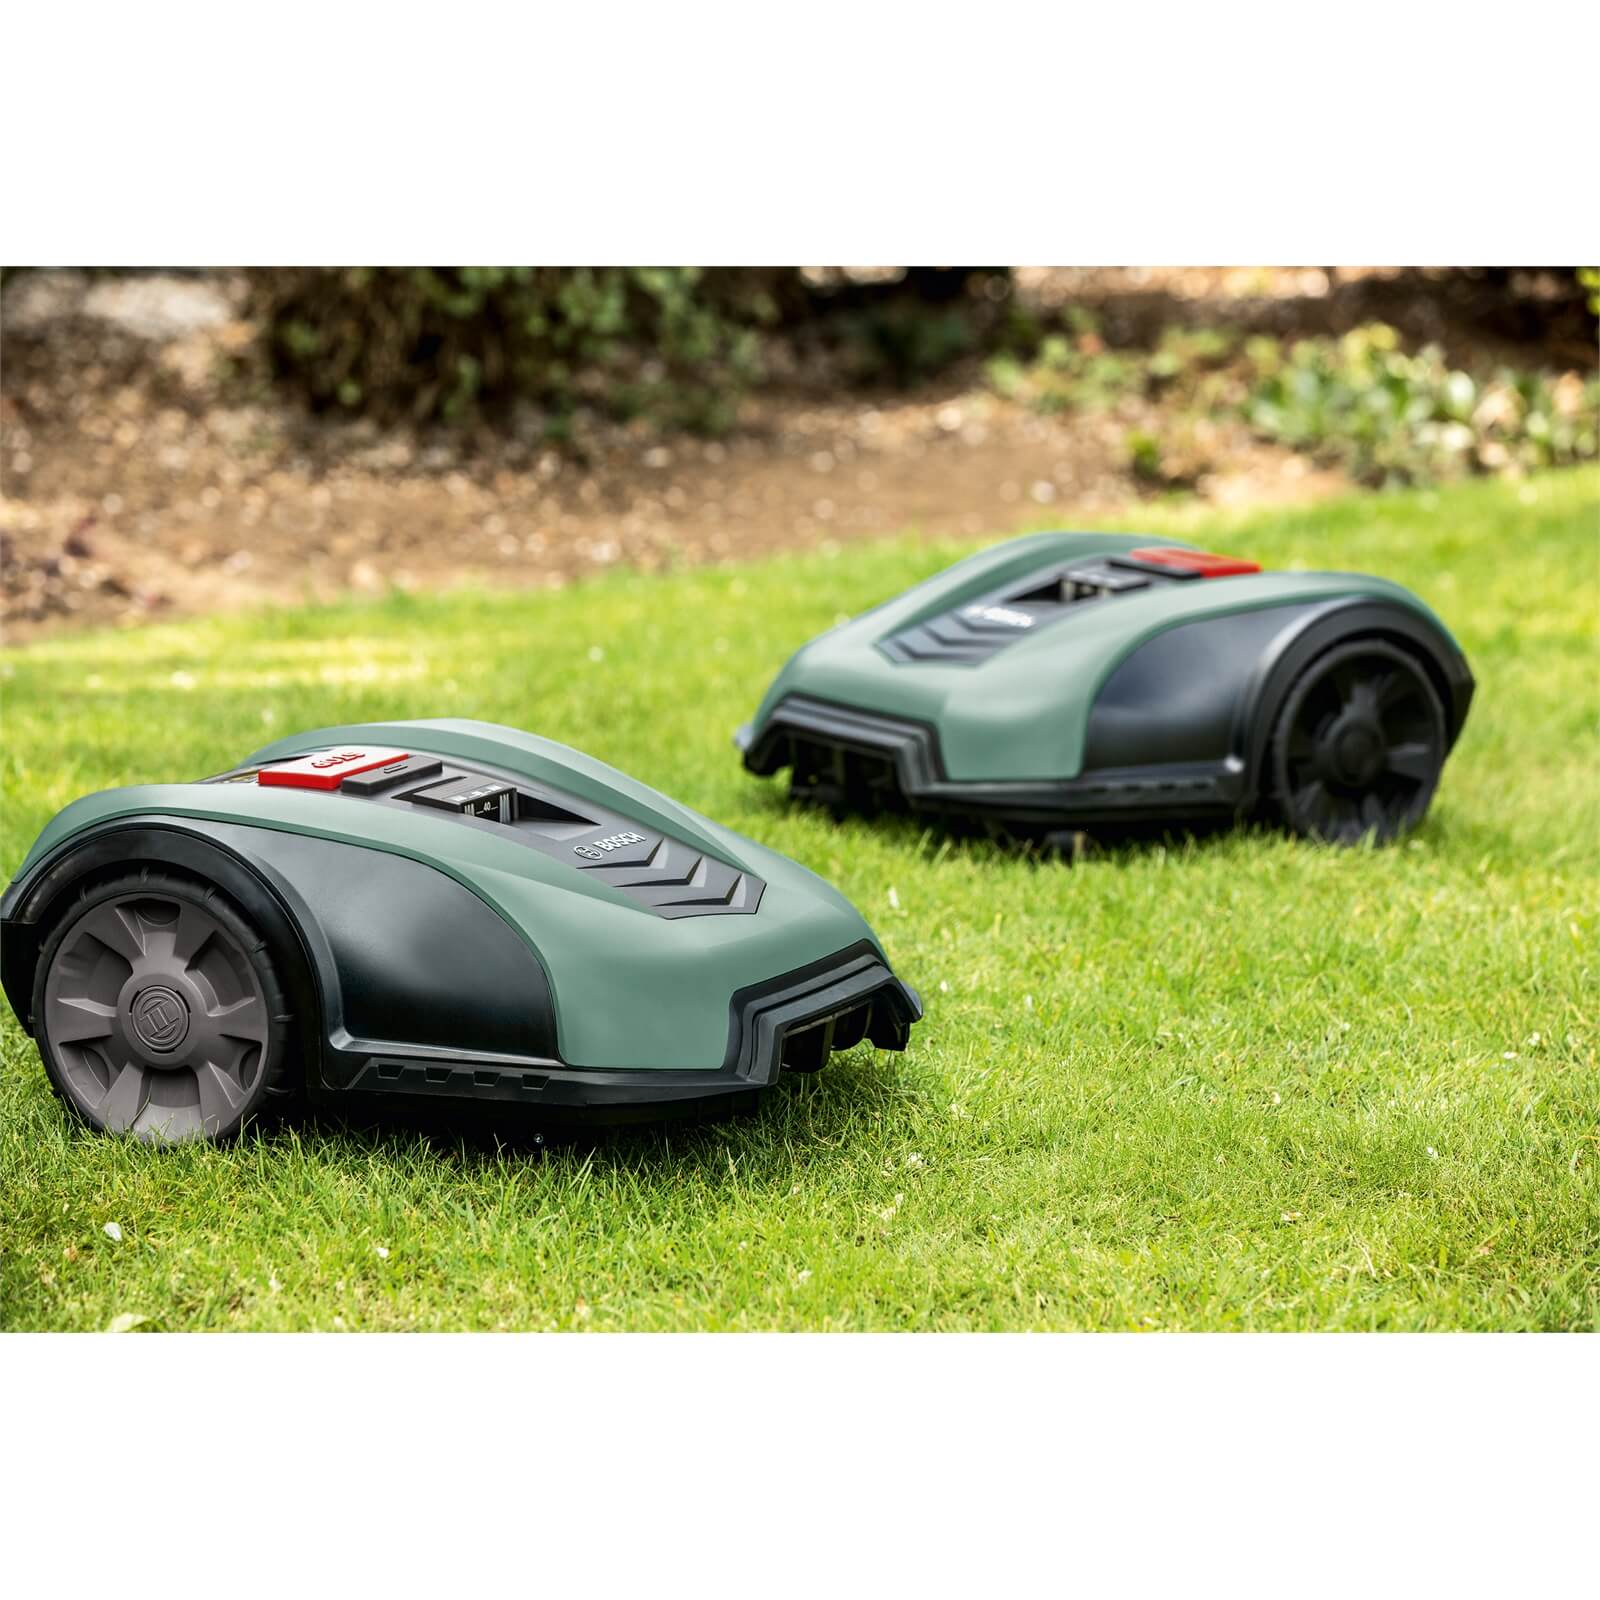 Bosch Indego M+ 700 Robotic Lawnmower